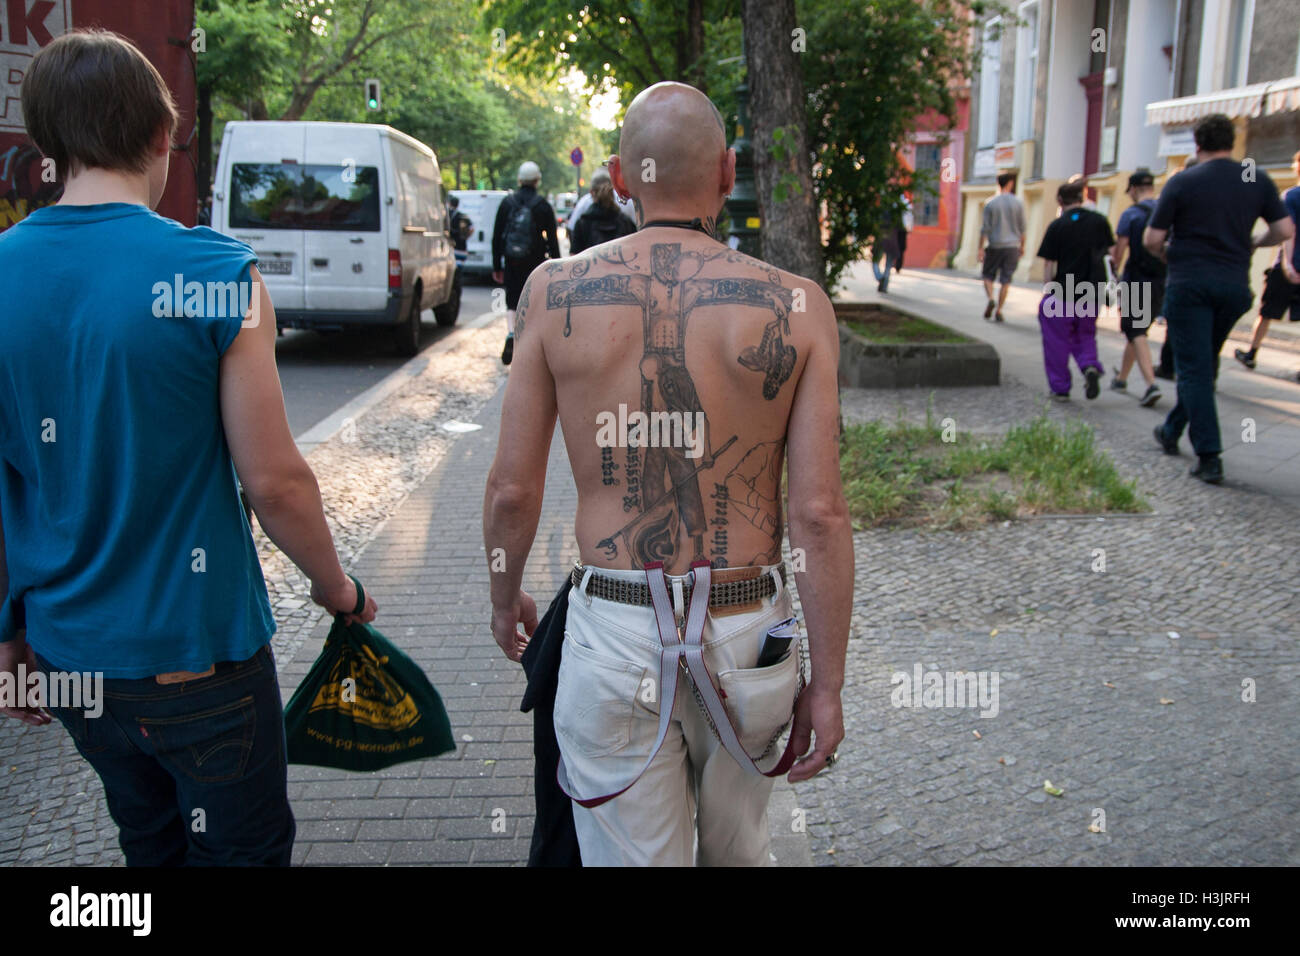 Manifestation antifasciste. (Tatouage : Skinheads contre le racisme). Berlin, Allemagne. Banque D'Images